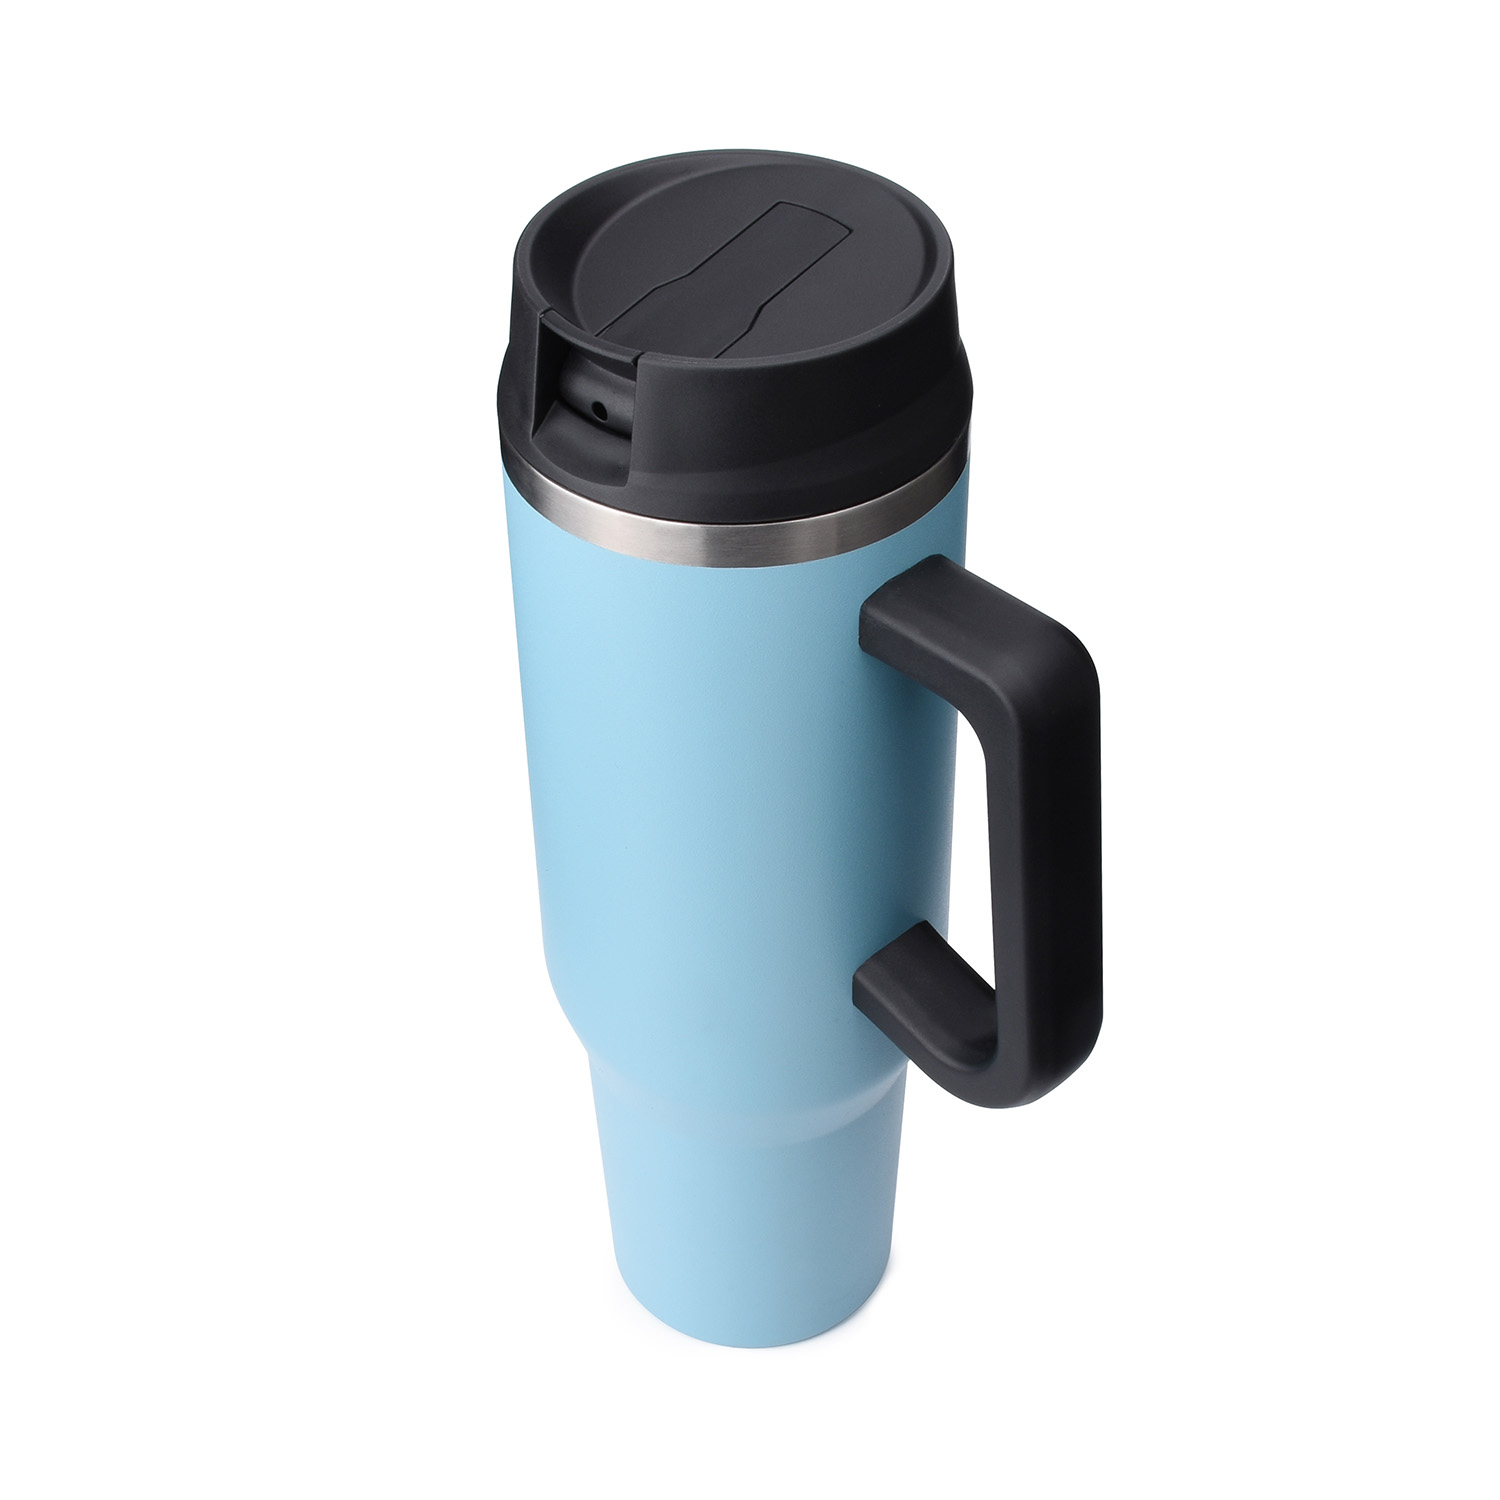 https://www.waterbottle.tech/wp-content/uploads/2021/10/blank-tumbler-bottle-with-handle-40-oz-fit-cup-holder-s214000-1.jpg